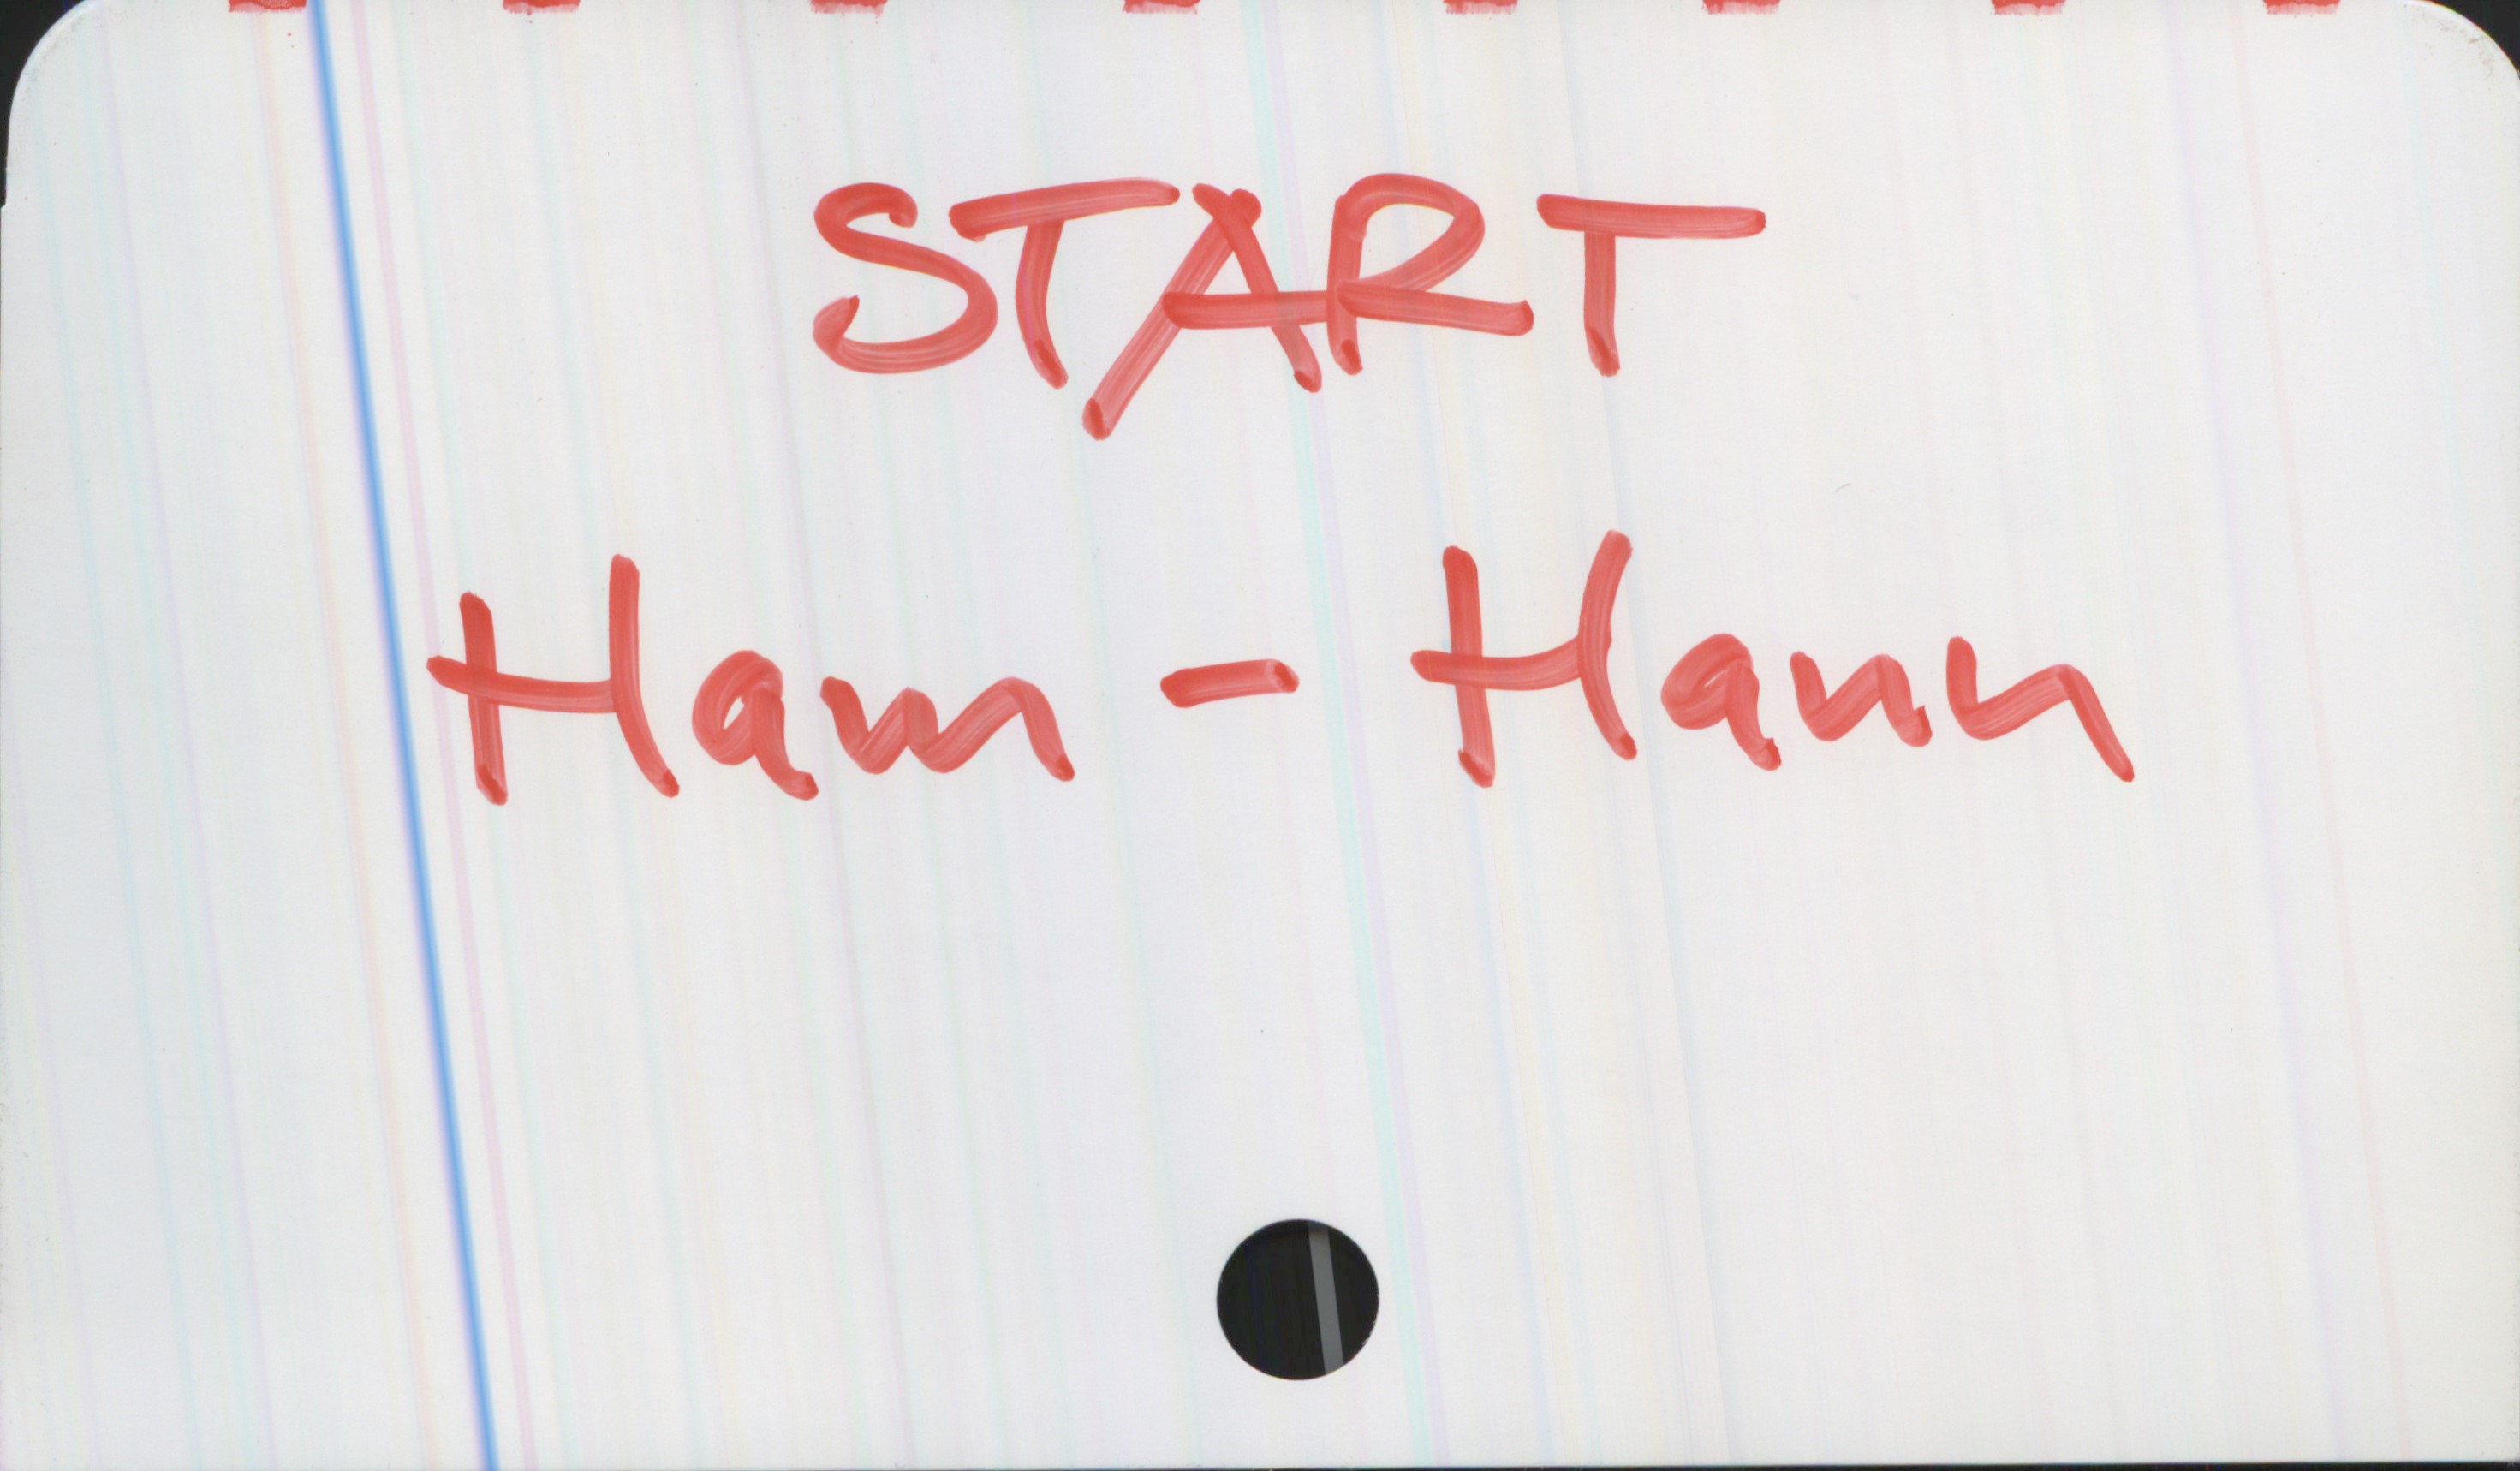 START Ham-Hann START
Ham-Hann